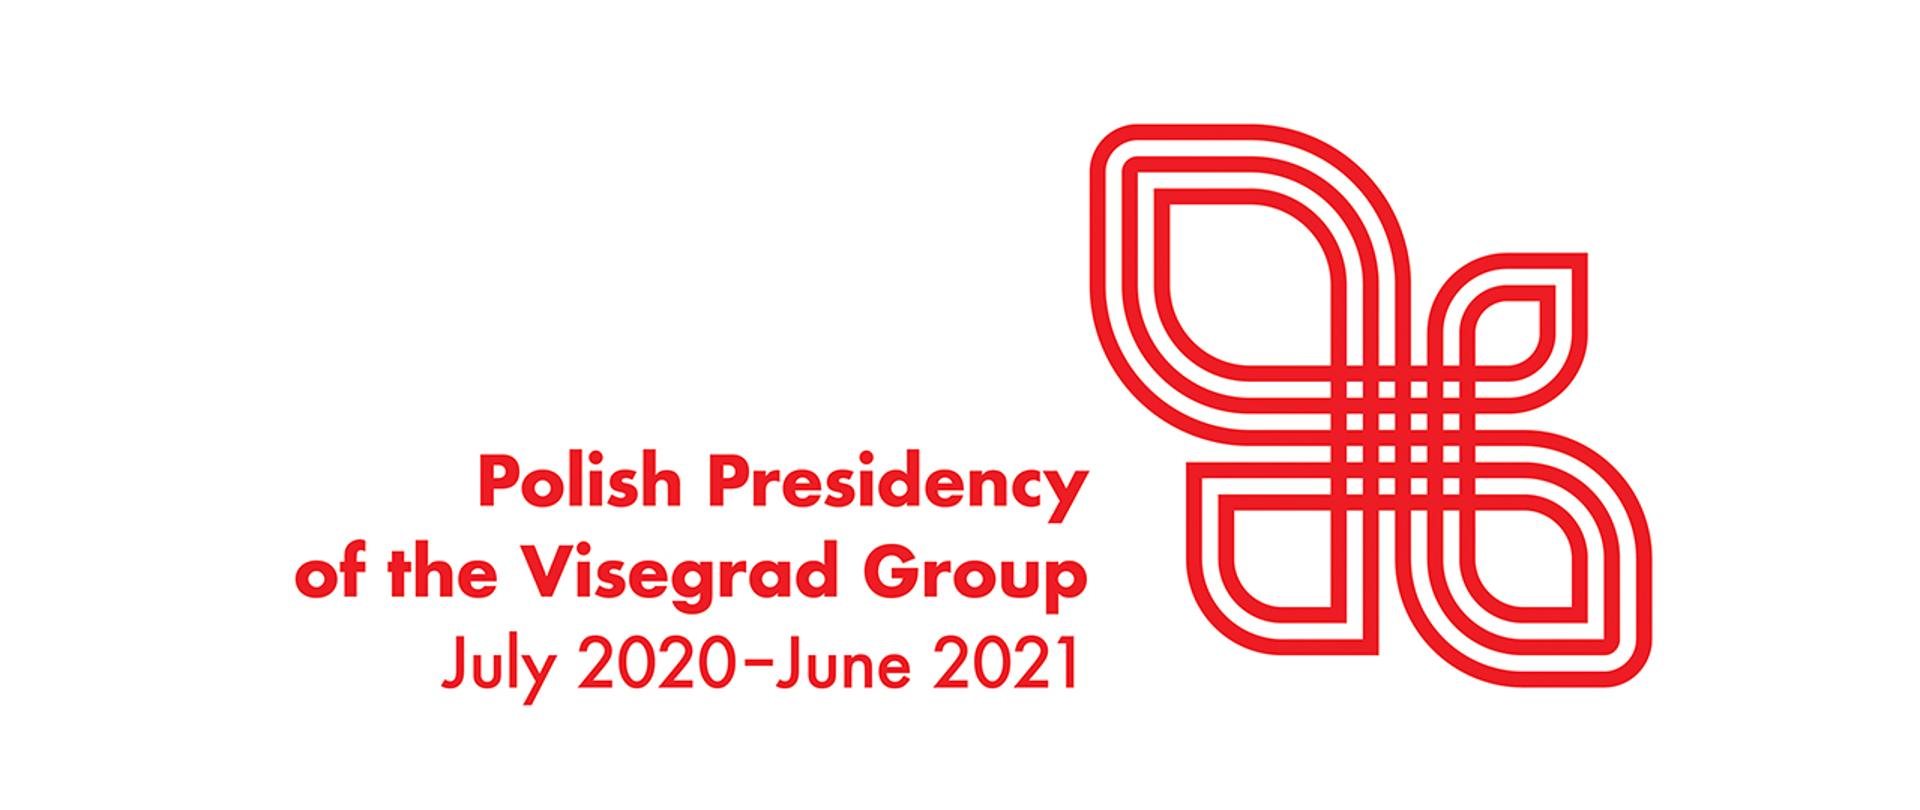 Polska prezydencja w V4 - Logo 